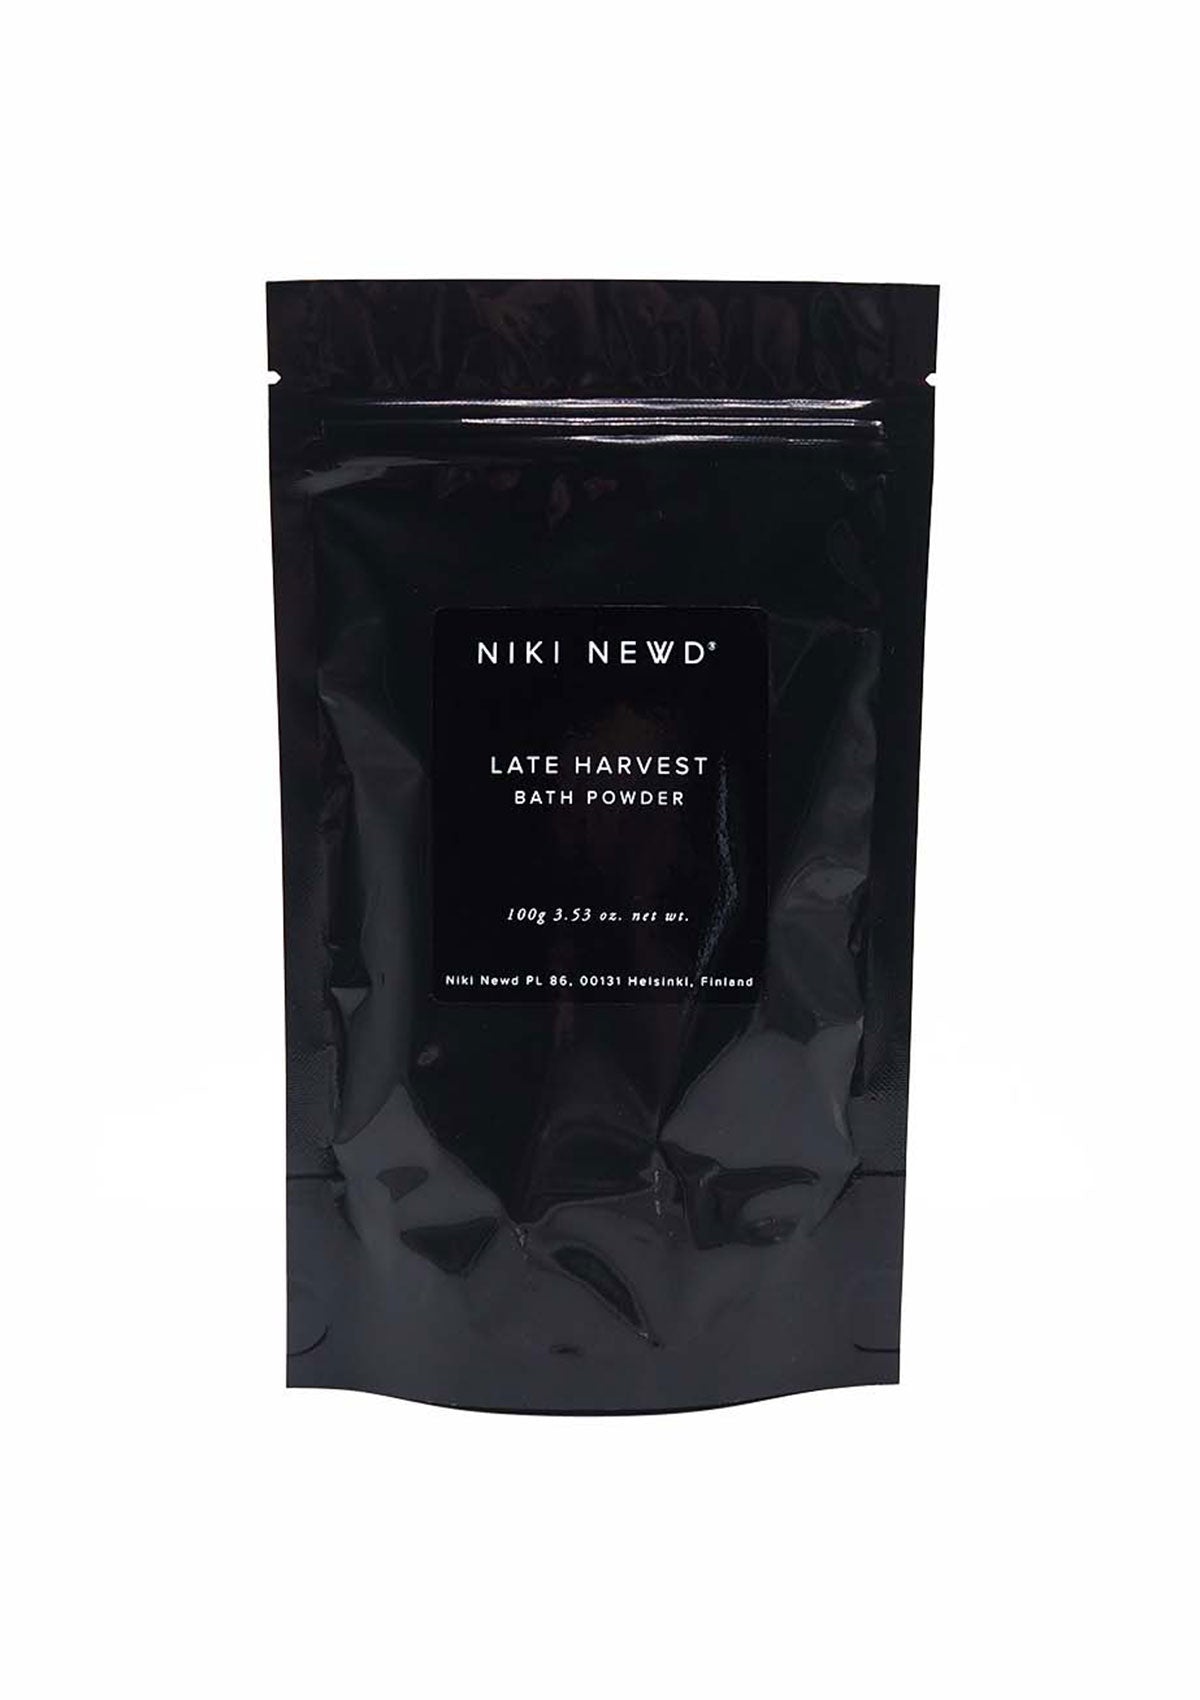 Niki Newd® Late Harvest Bath Powder